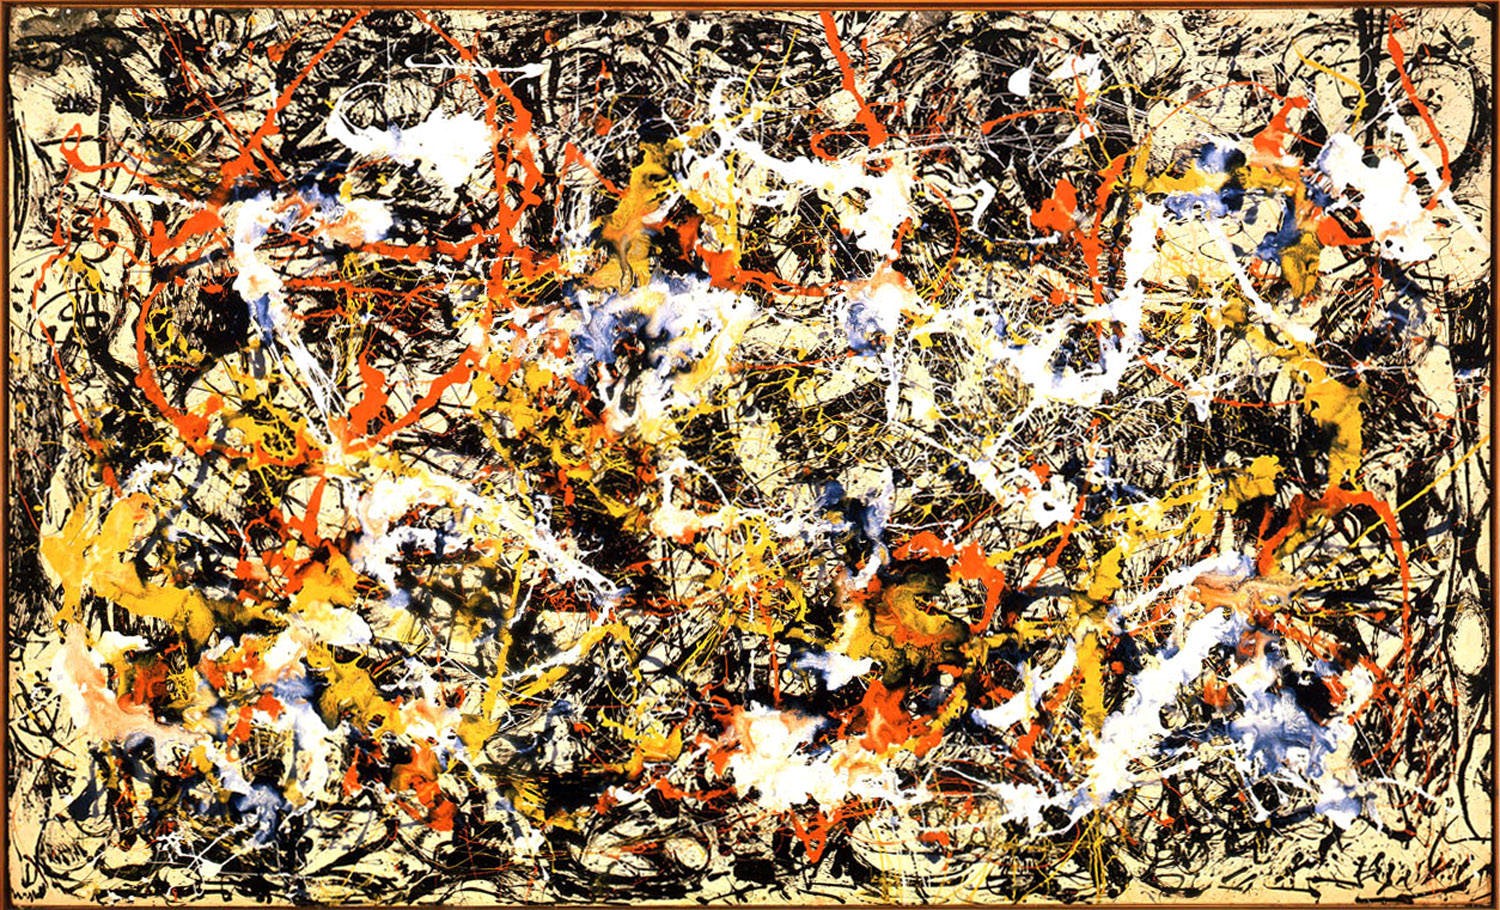 Jackson Pollock, Convergence, oil on canvas, 1952.